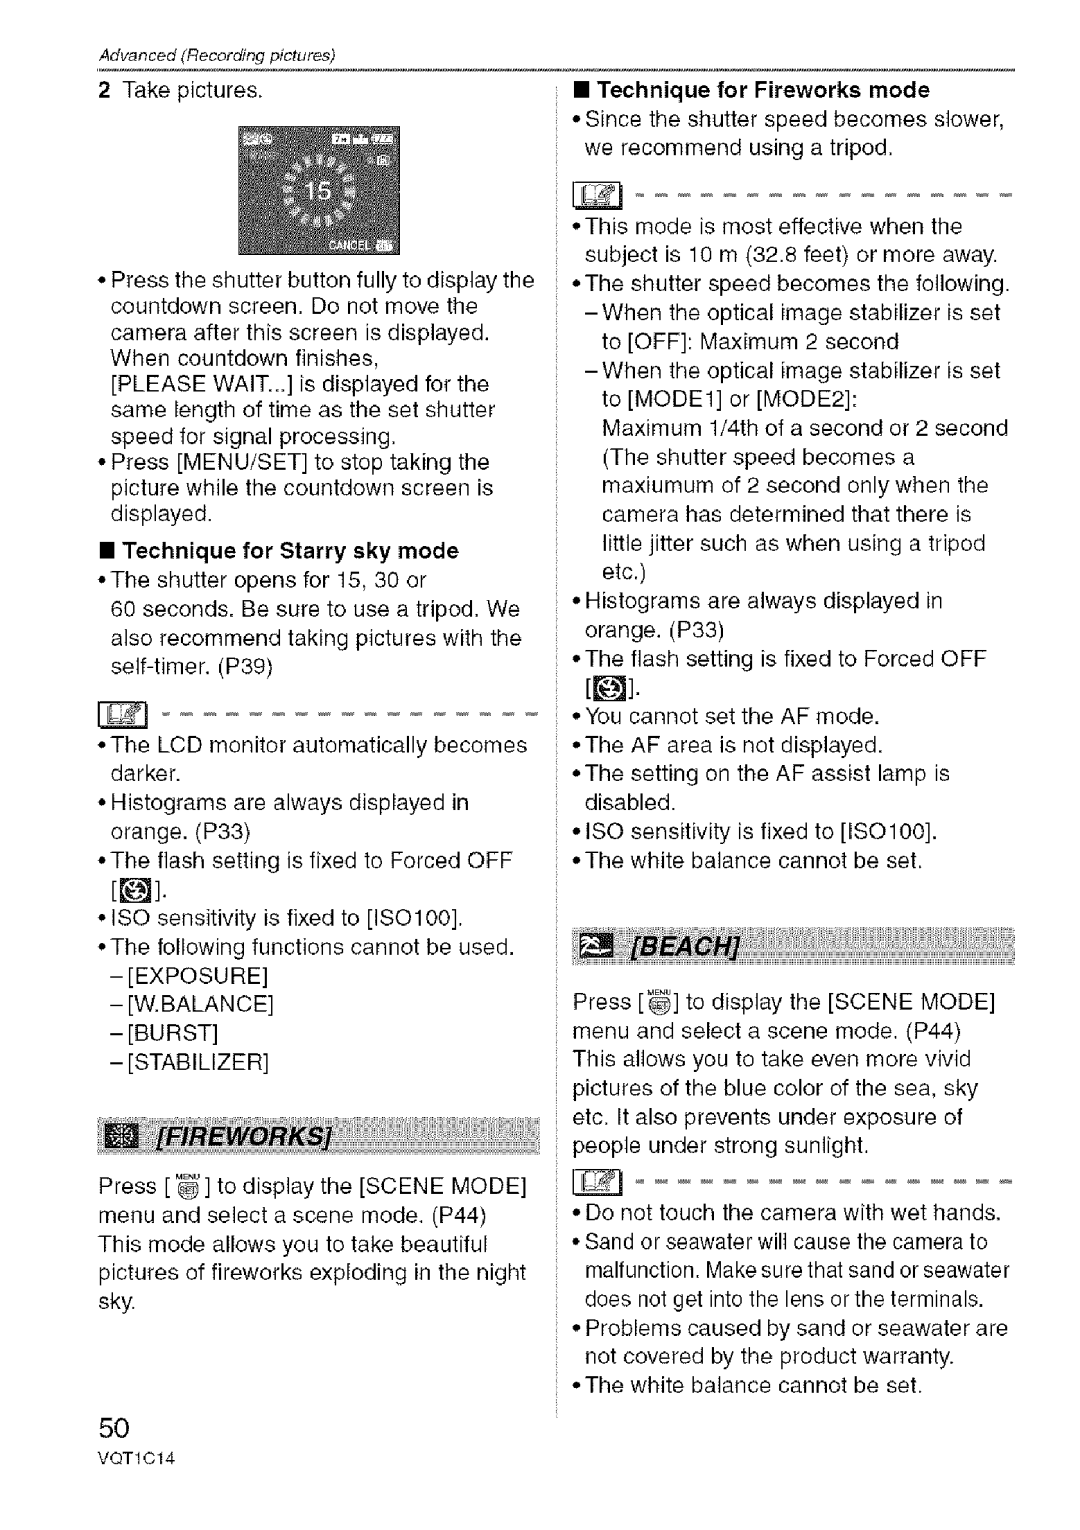 Panasonic DMC-FX12, DMC-FX10 operating instructions Exposure Balance Burst Stabilizer 